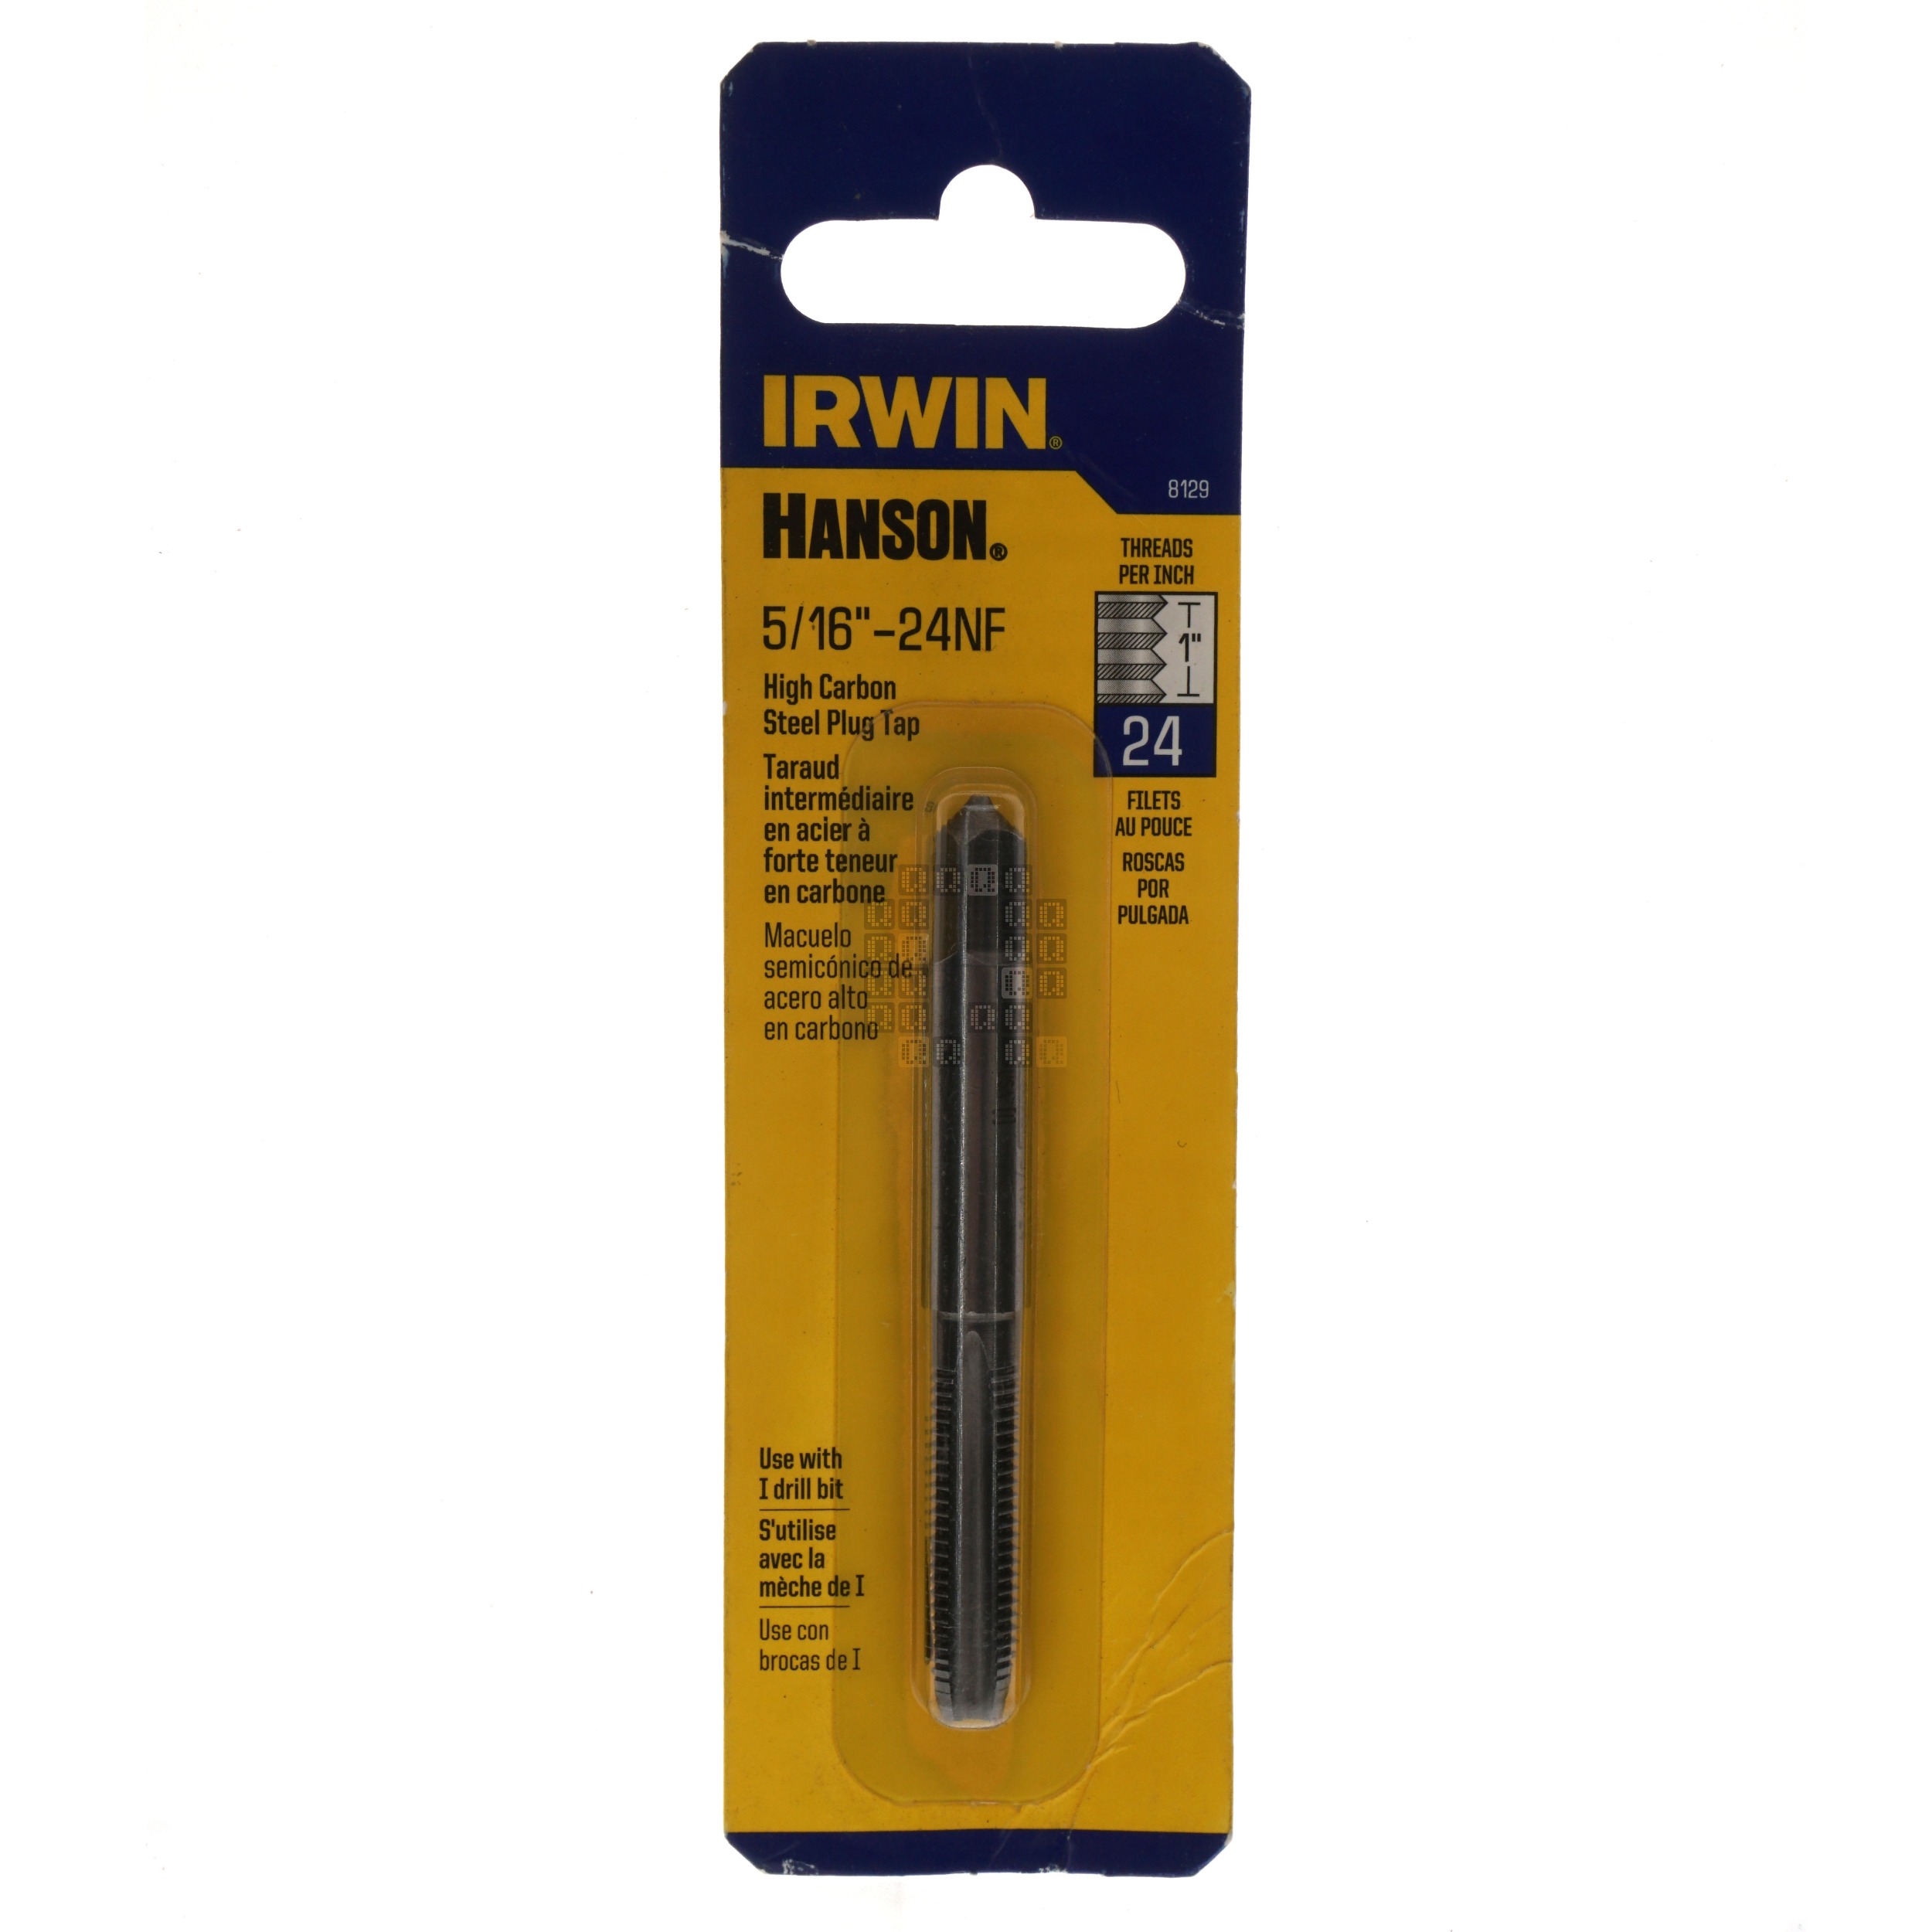 Irwin Hanson 8129 5/16" -24 NF High Carbon Steel Plug Tap